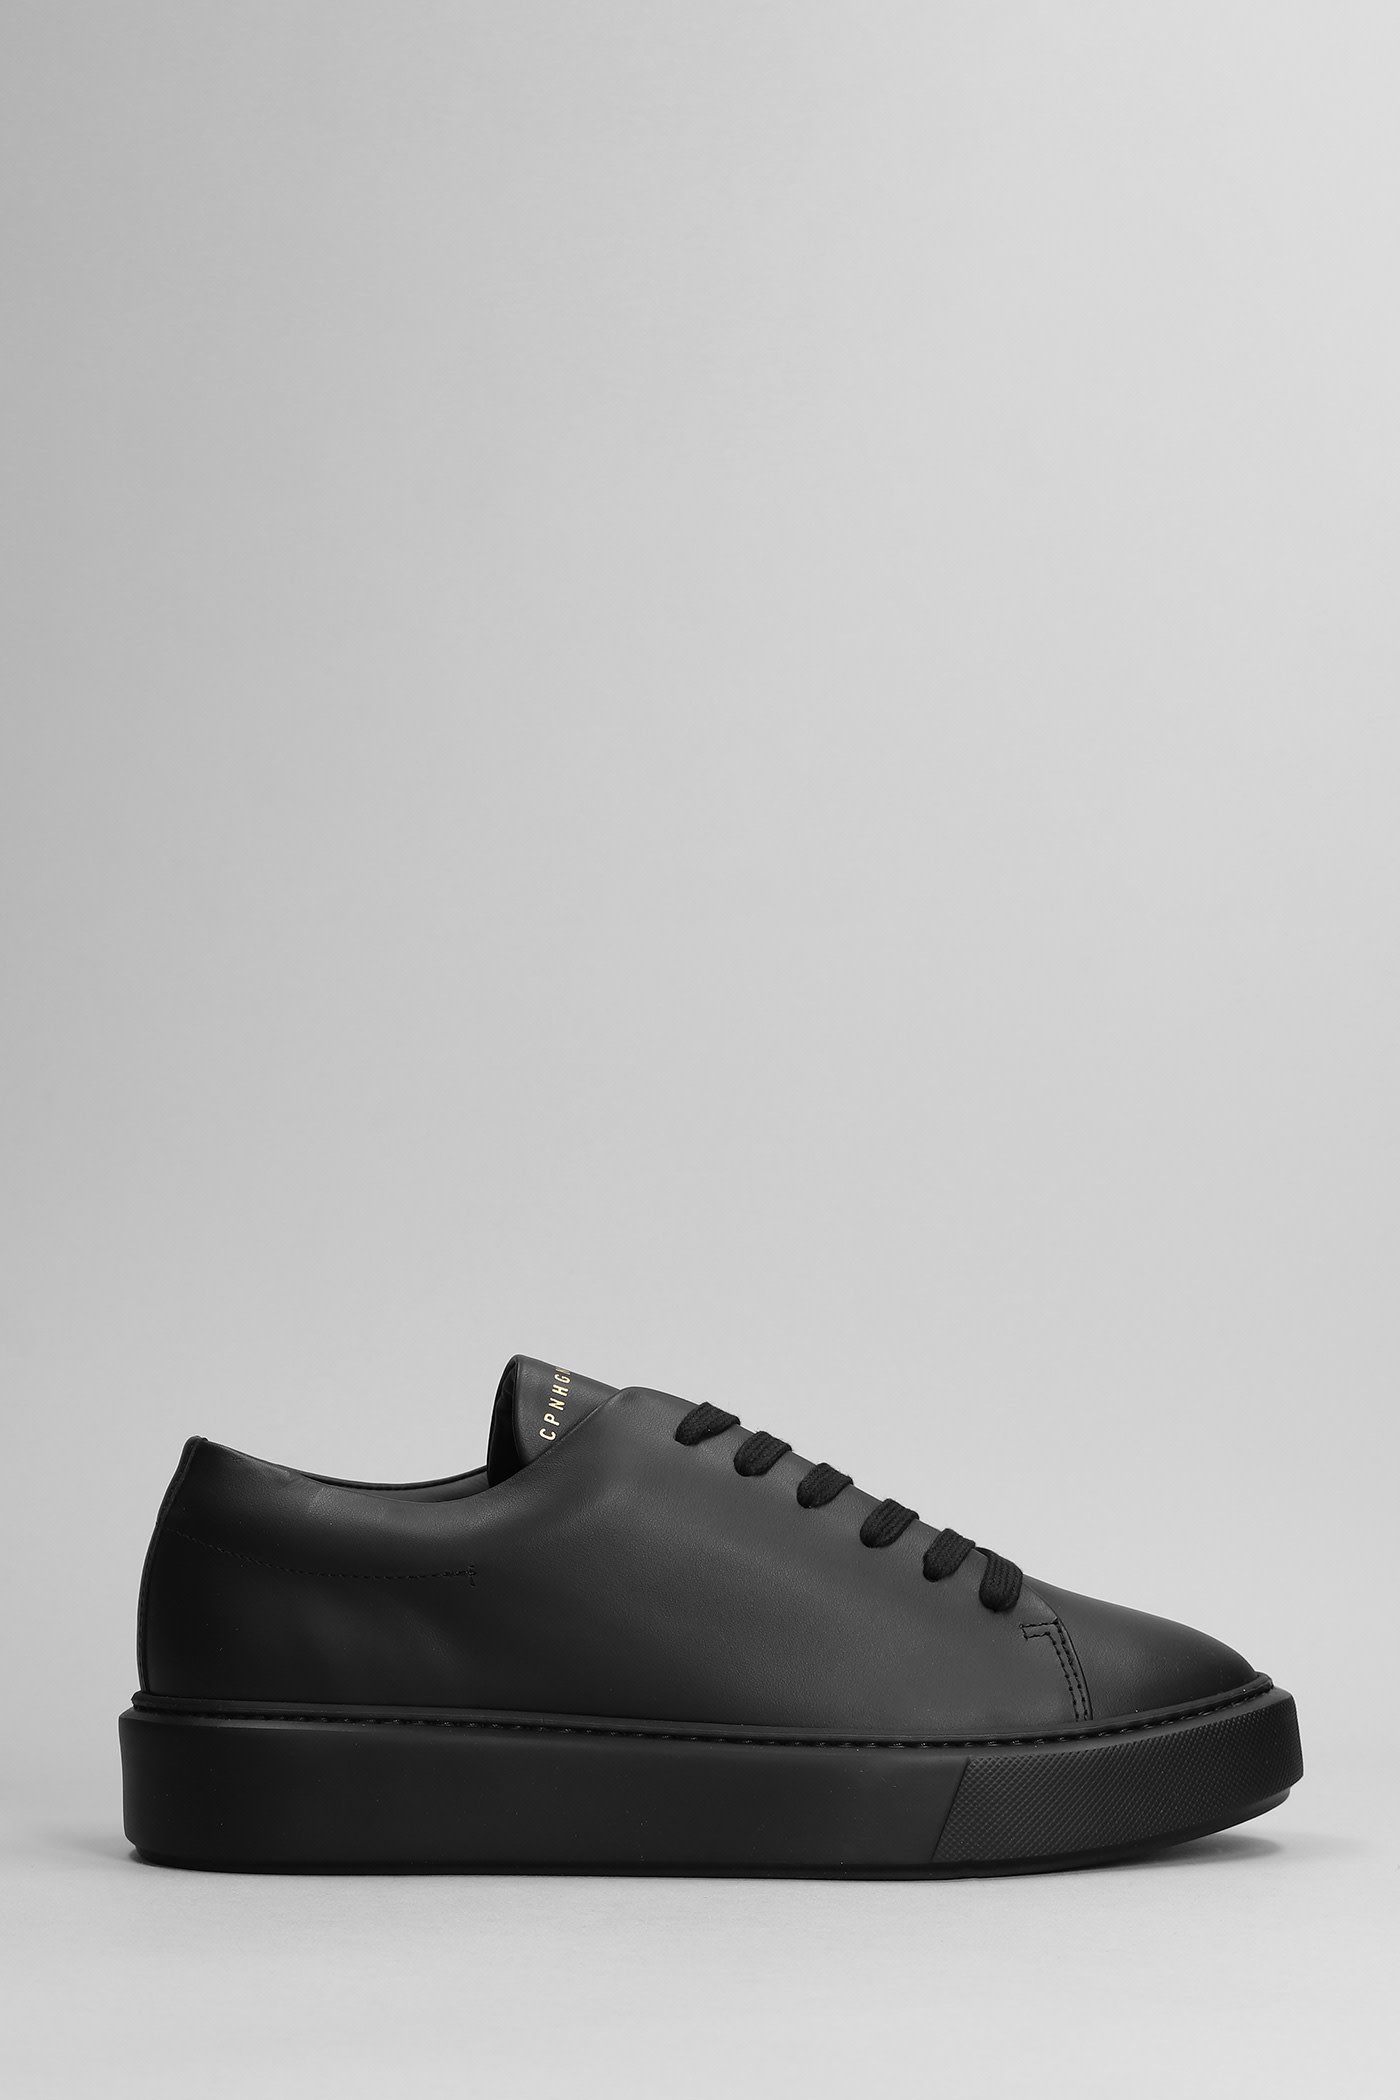 Copenhagen Sneakers In Black Leather